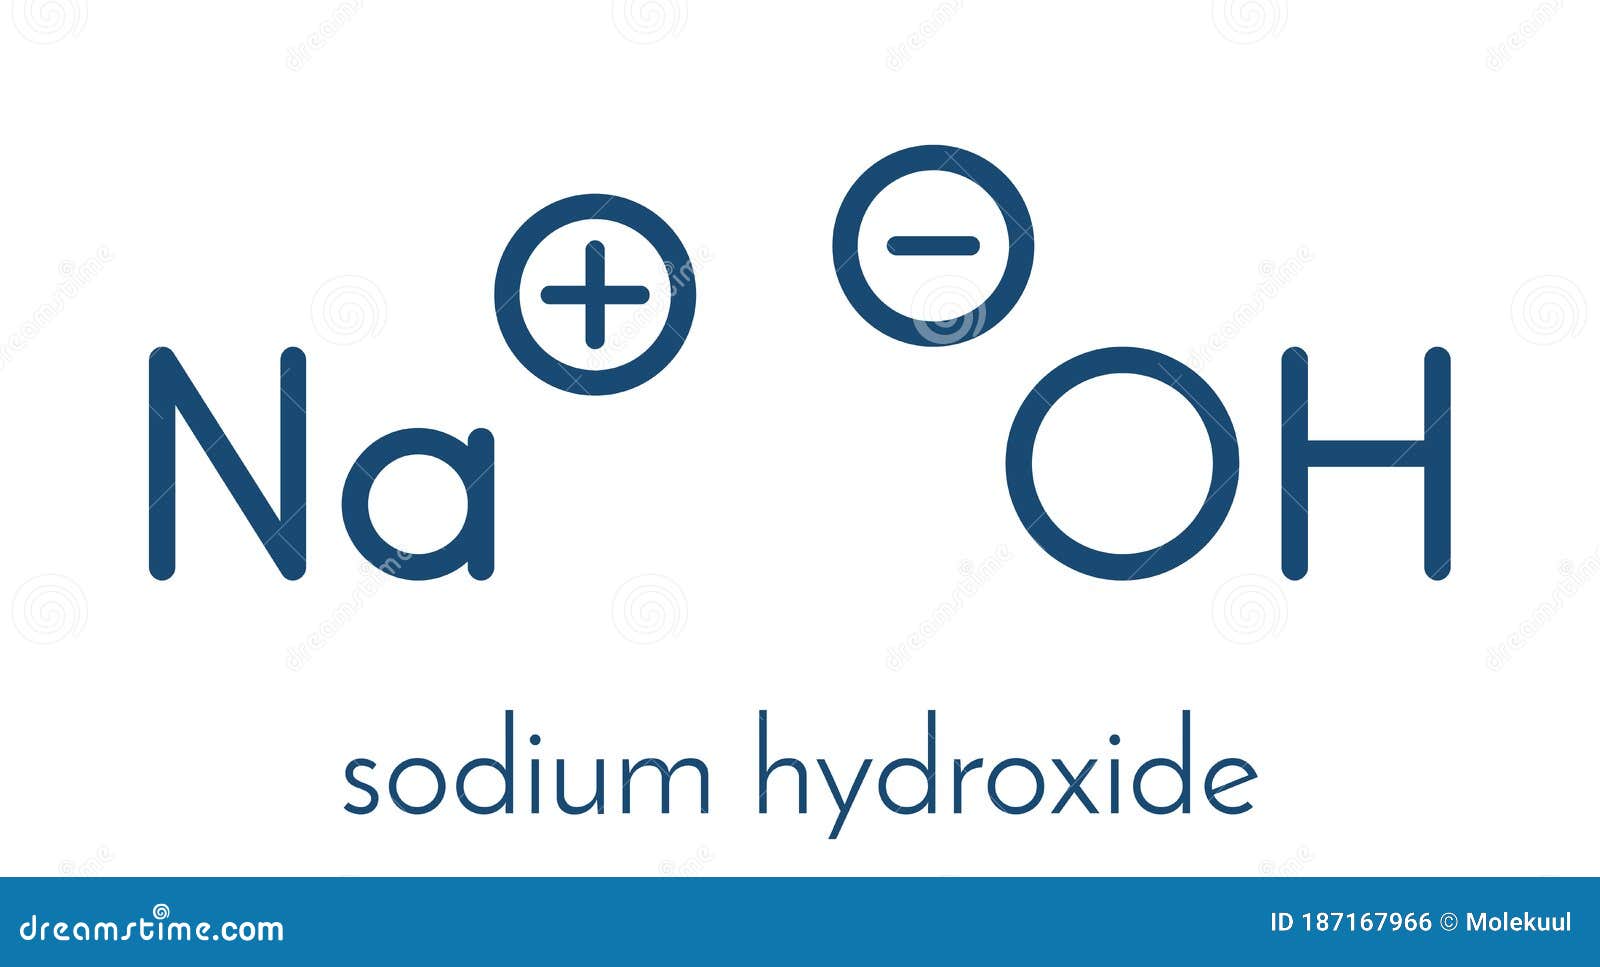 sodium hydroxide structure